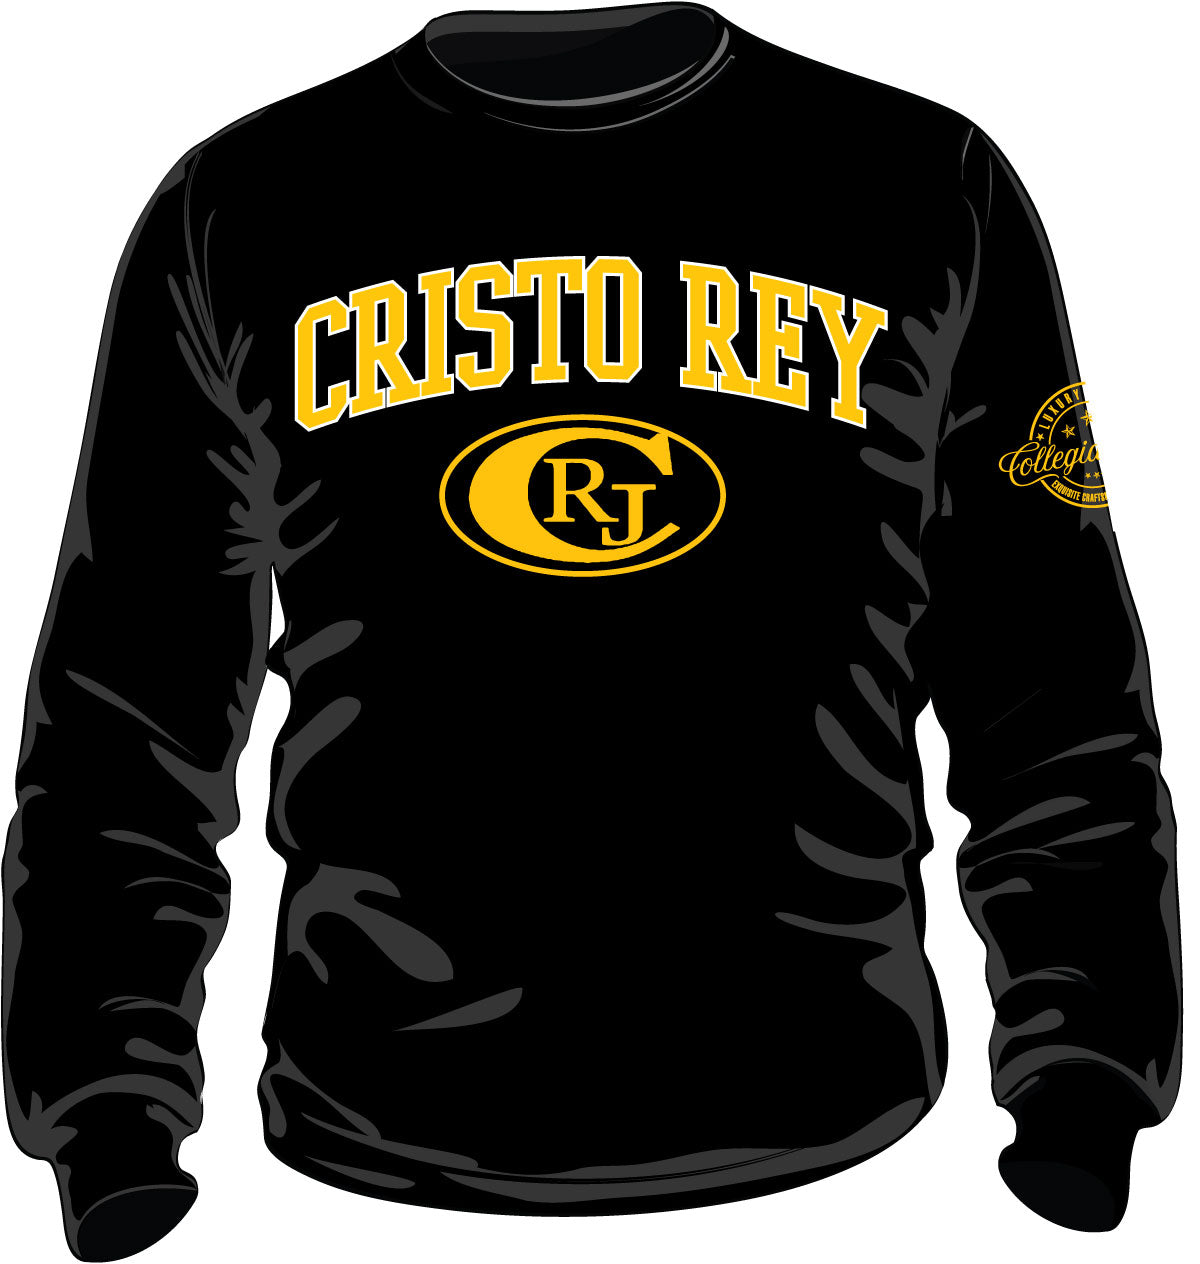 Cristo Rey | CRJ LOGO Unisex Sweatshirt